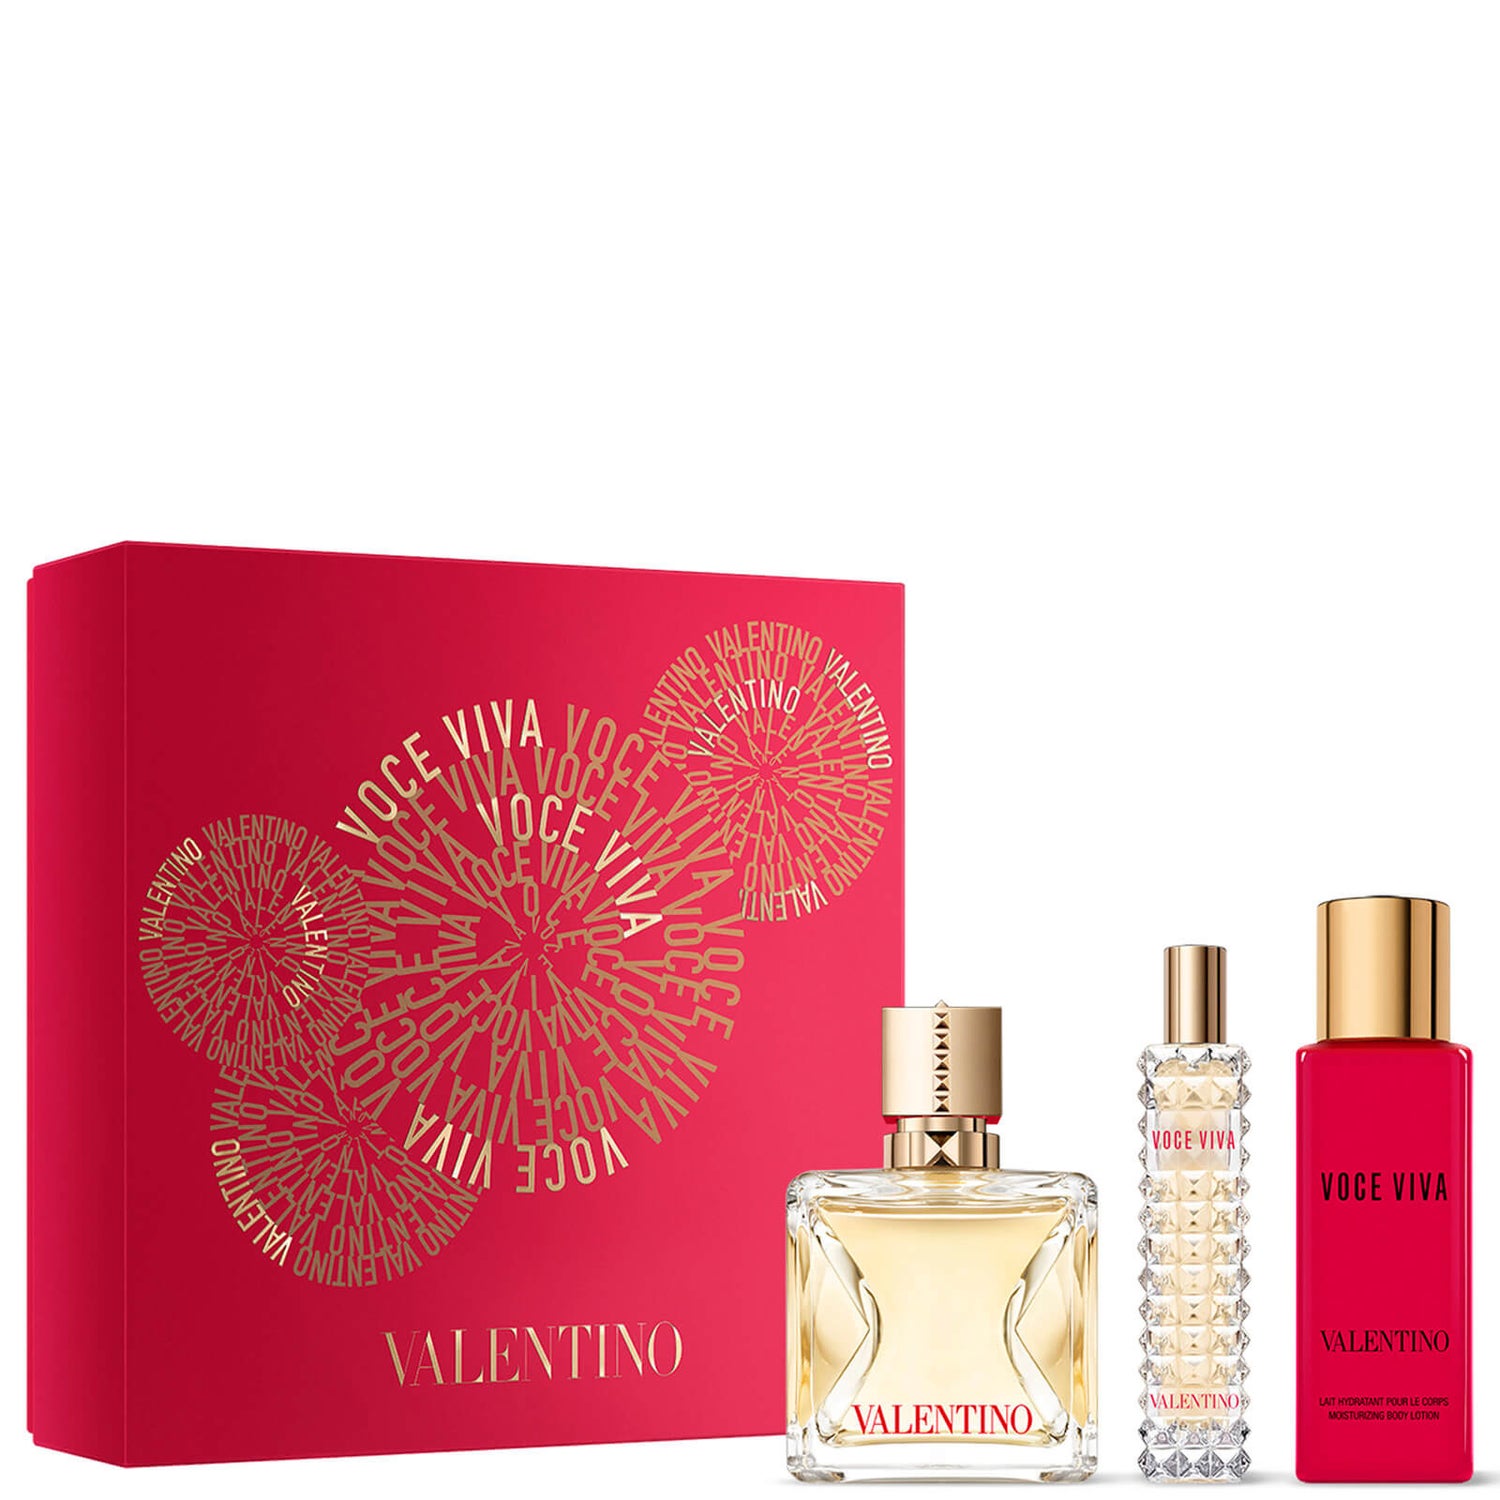 Conjunto de Presentes Valentino Voce Viva Eau de Parfum 100ml